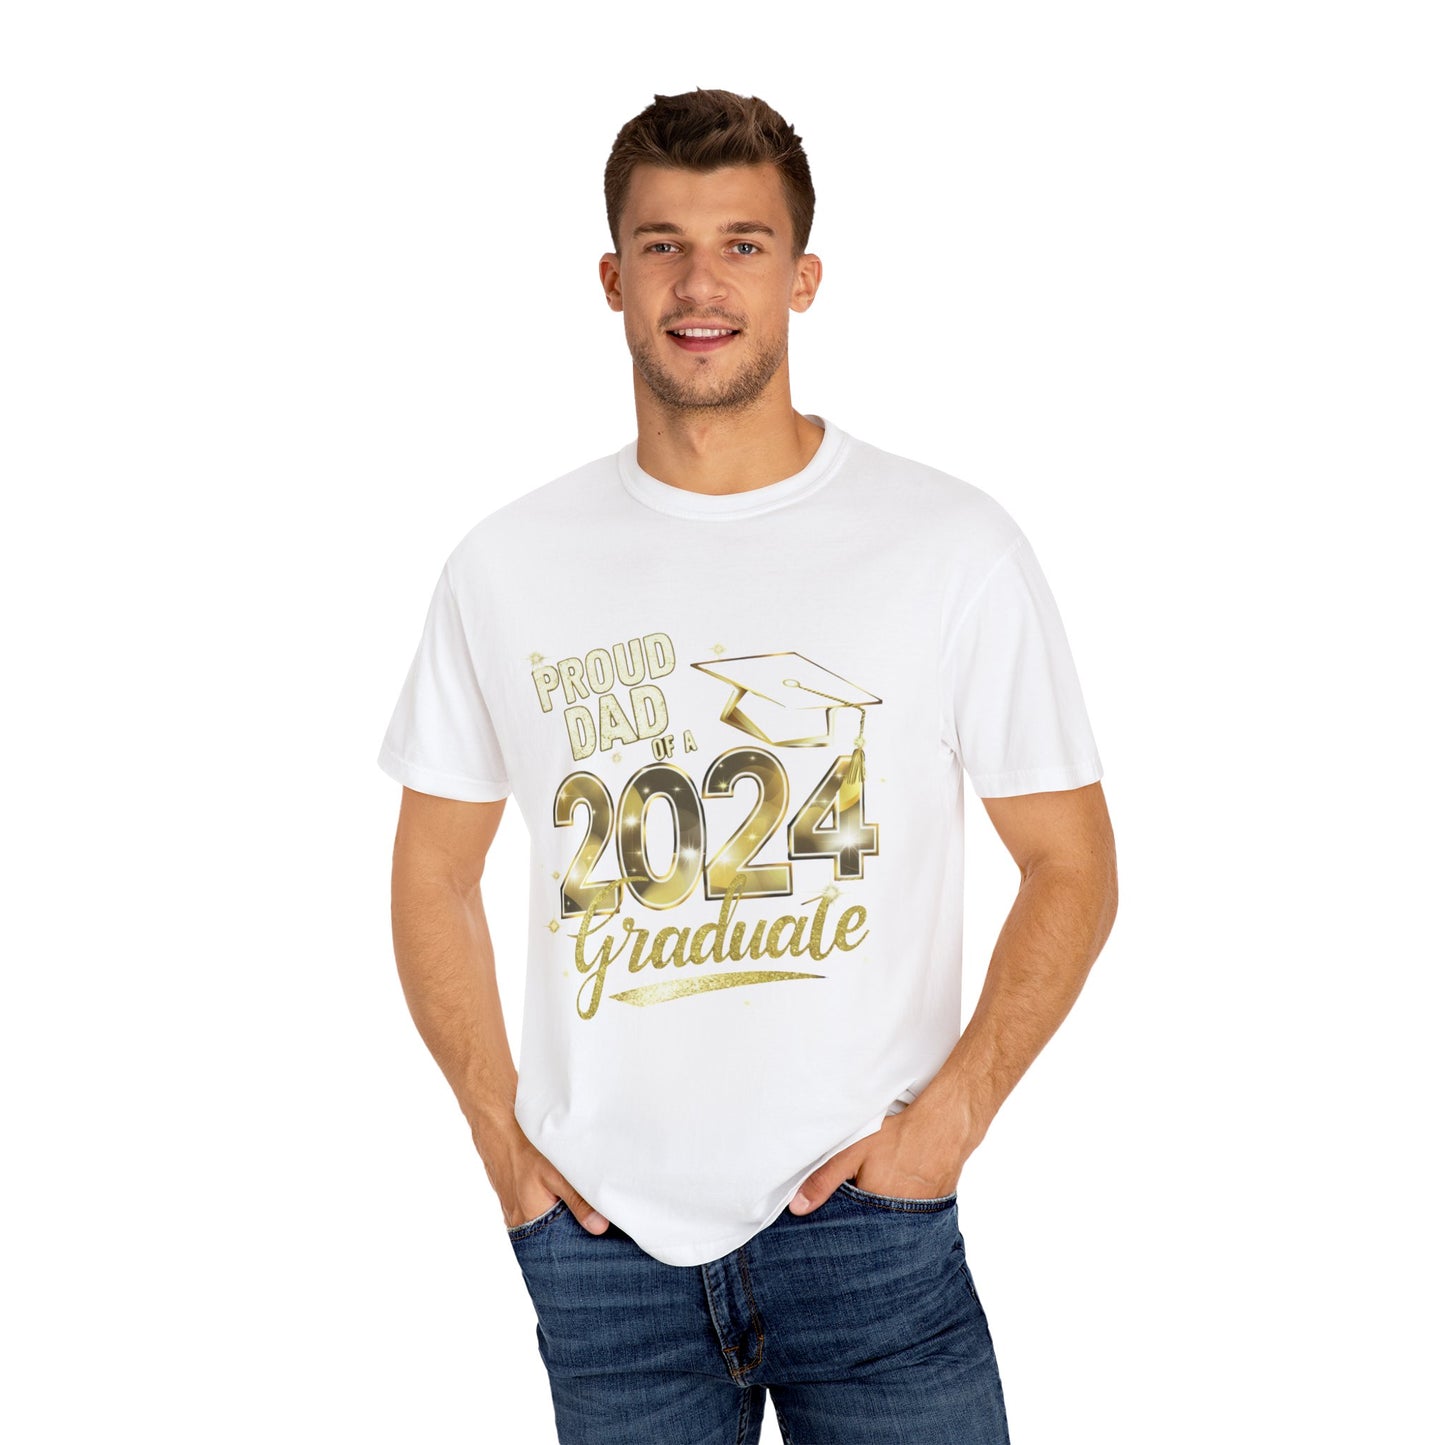 Proud of Dad 2024 Graduate Unisex Garment-dyed T-shirt Cotton Funny Humorous Graphic Soft Premium Unisex Men Women White T-shirt Birthday Gift-24